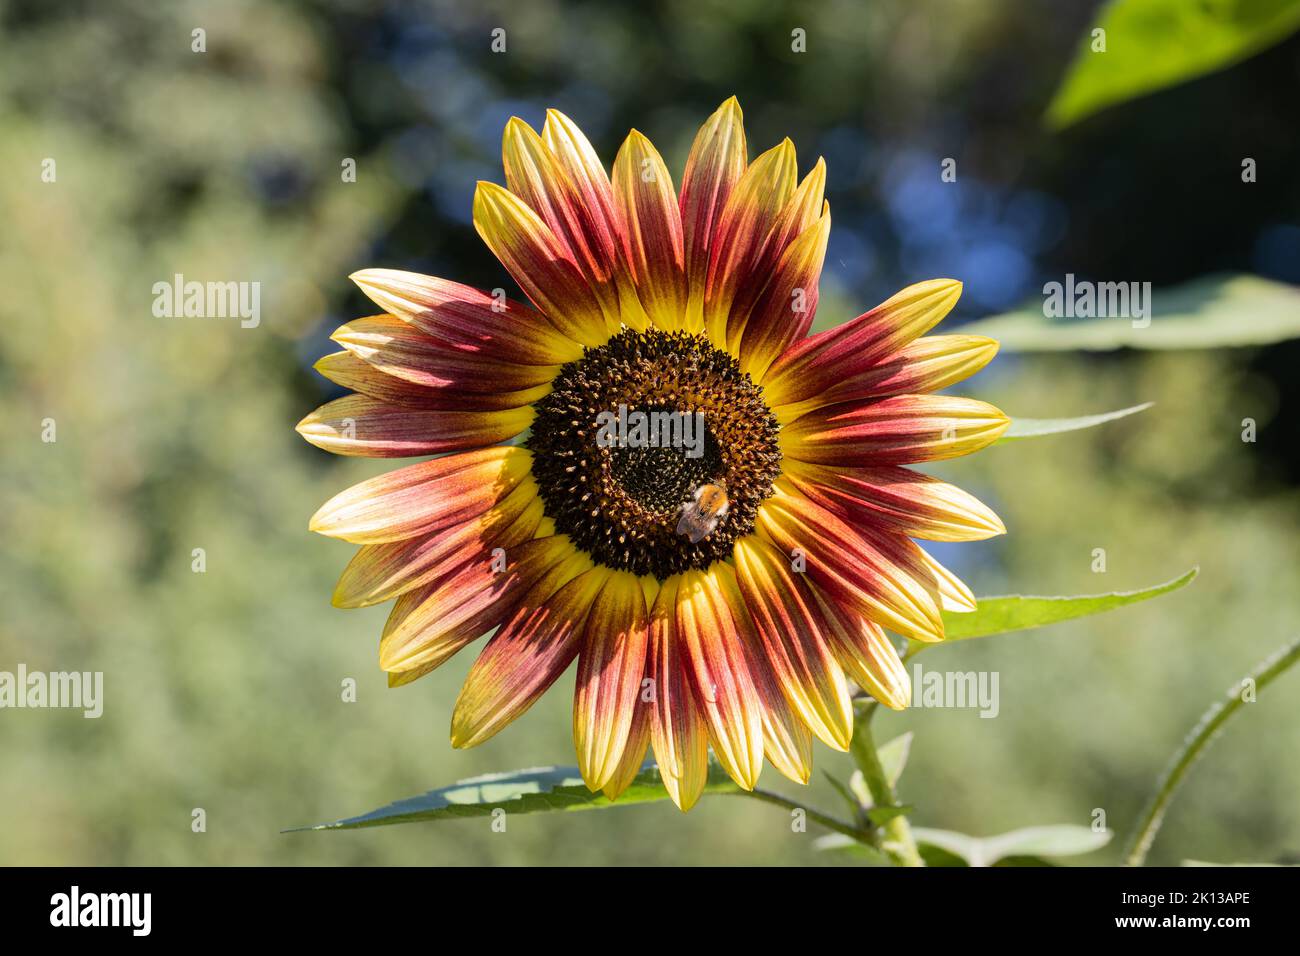 Small bumblebee feeding on a sunflower, Dorset, England, UK Stock Photo